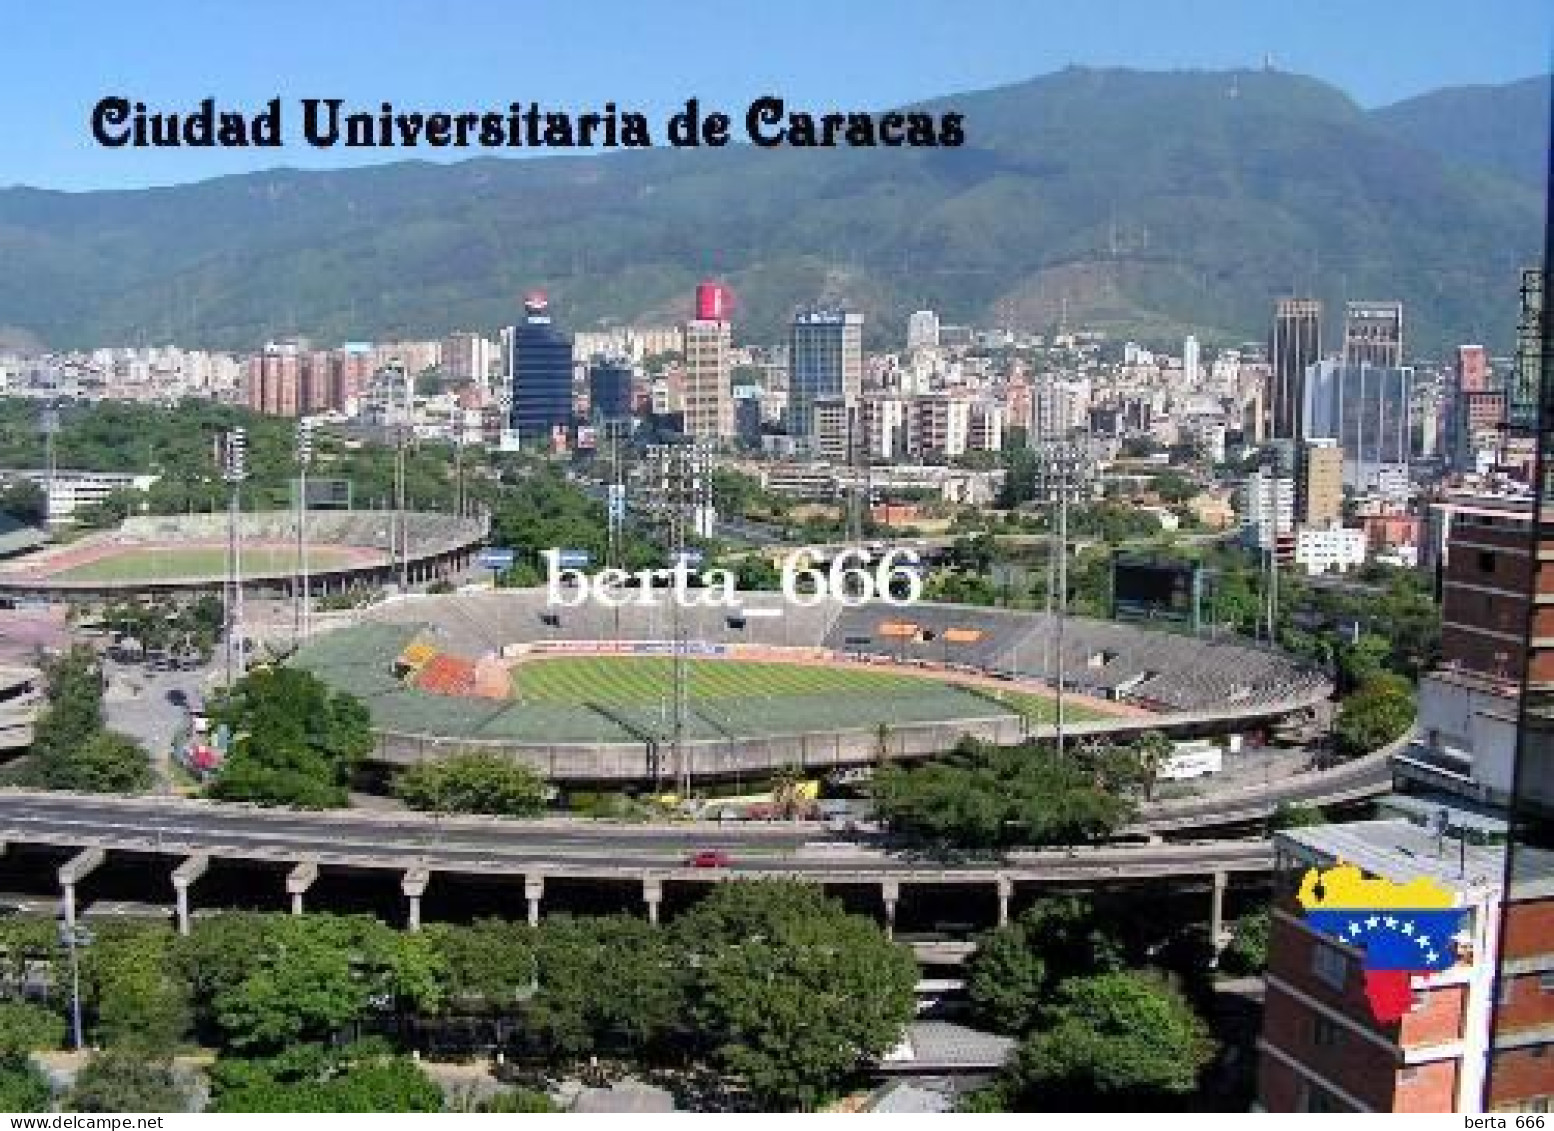 Venezuela Caracas University City Stadiums UNESCO New Postcard - Venezuela